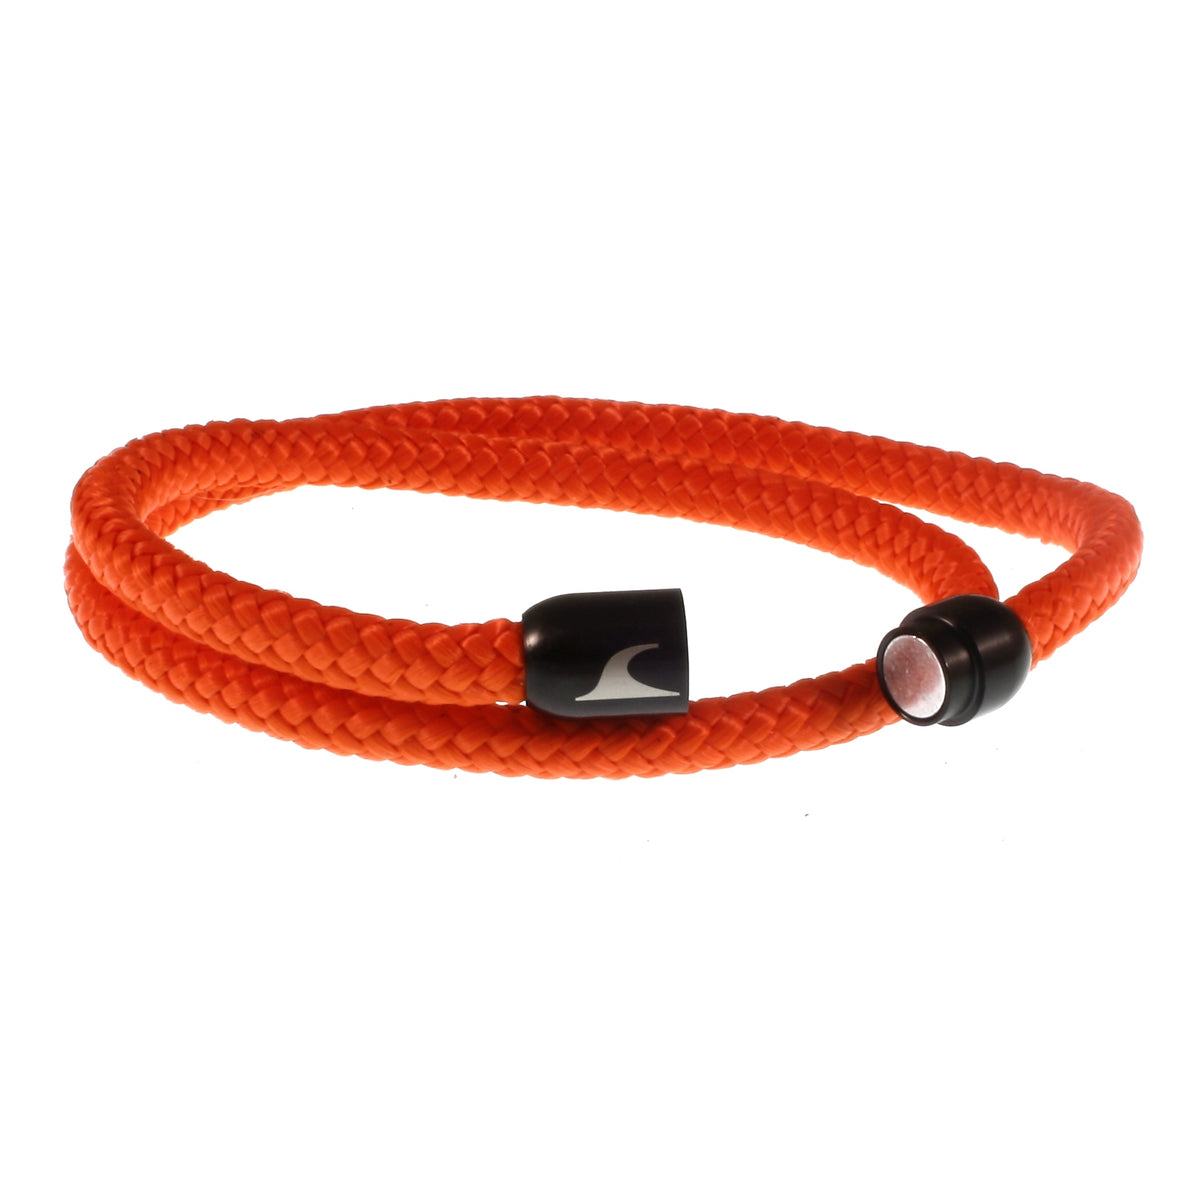 Herren-Segeltau-Armband-damen-hawaii-orange-schwarz-Edelstahlverschluss-offen-wavepirate-shop-st